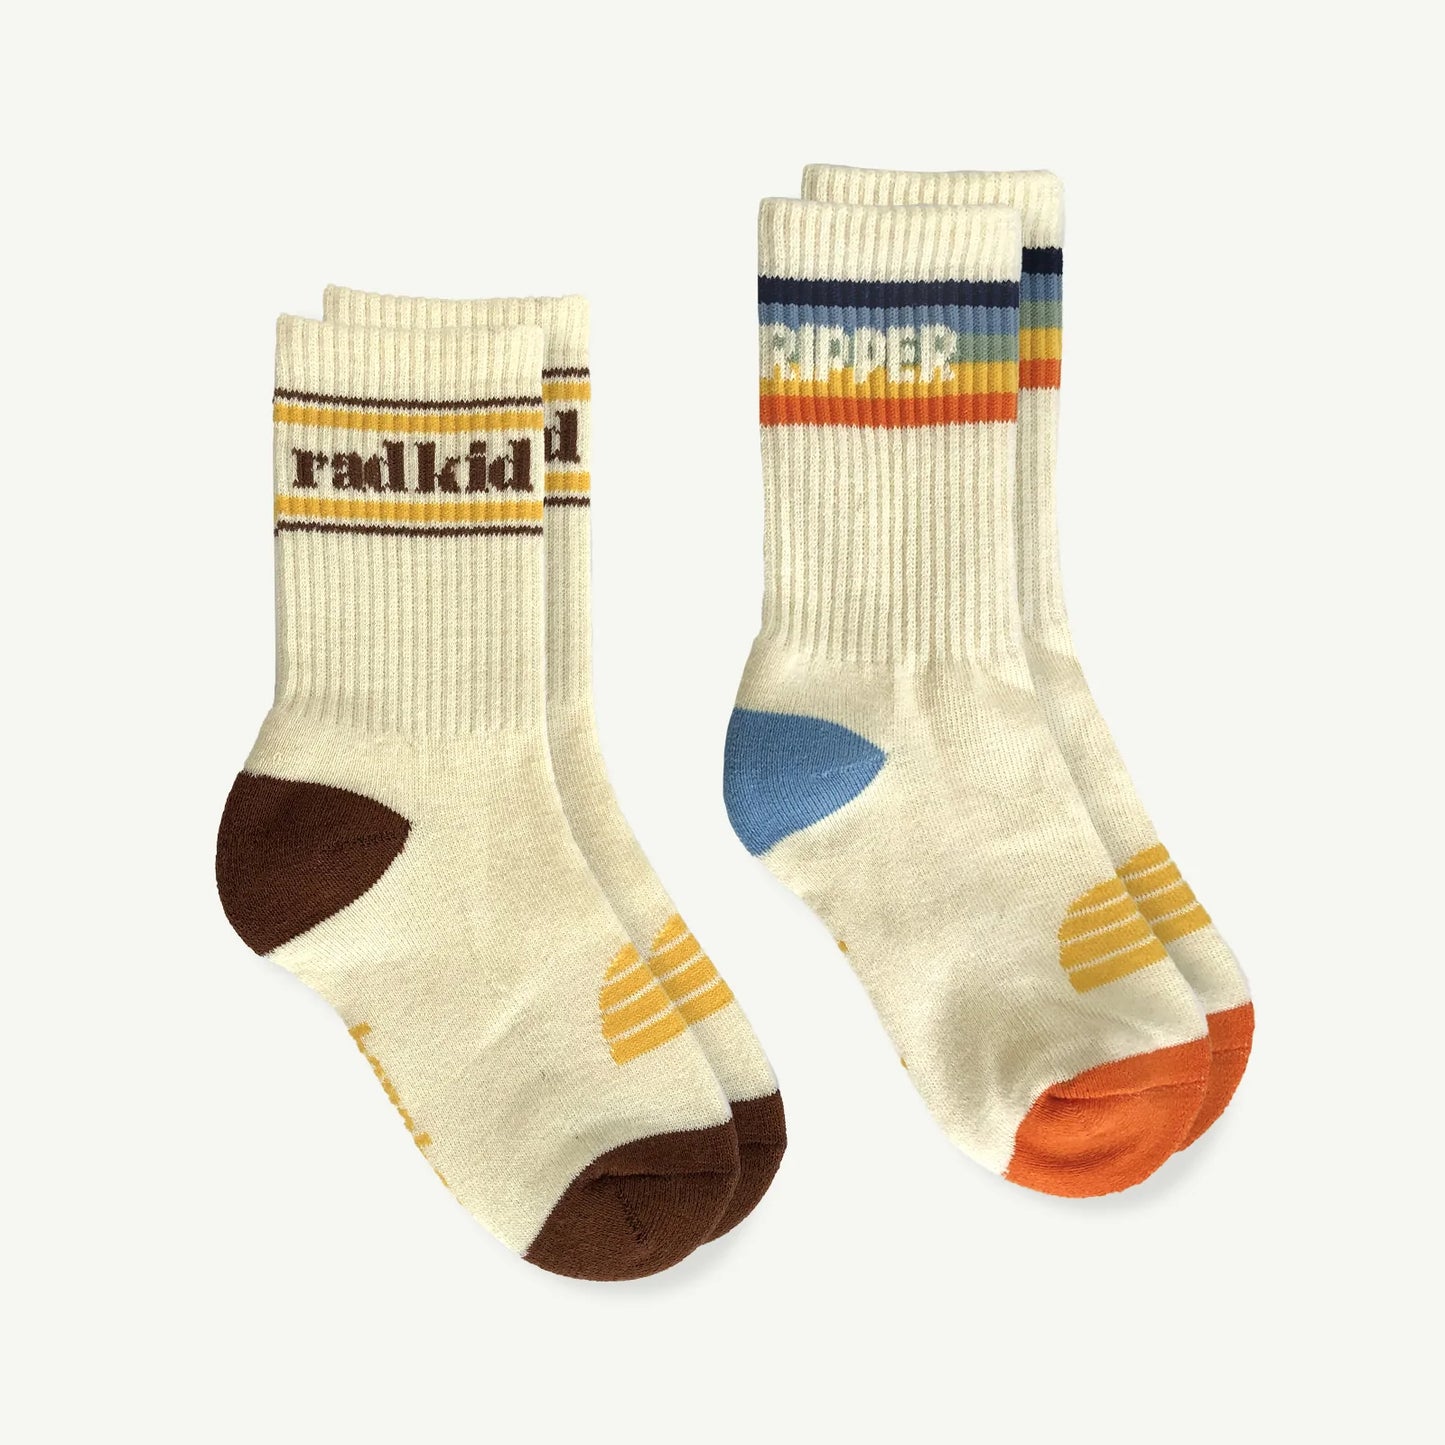 Rad Kid and Little Ripper Organic Cotton Sock Pack